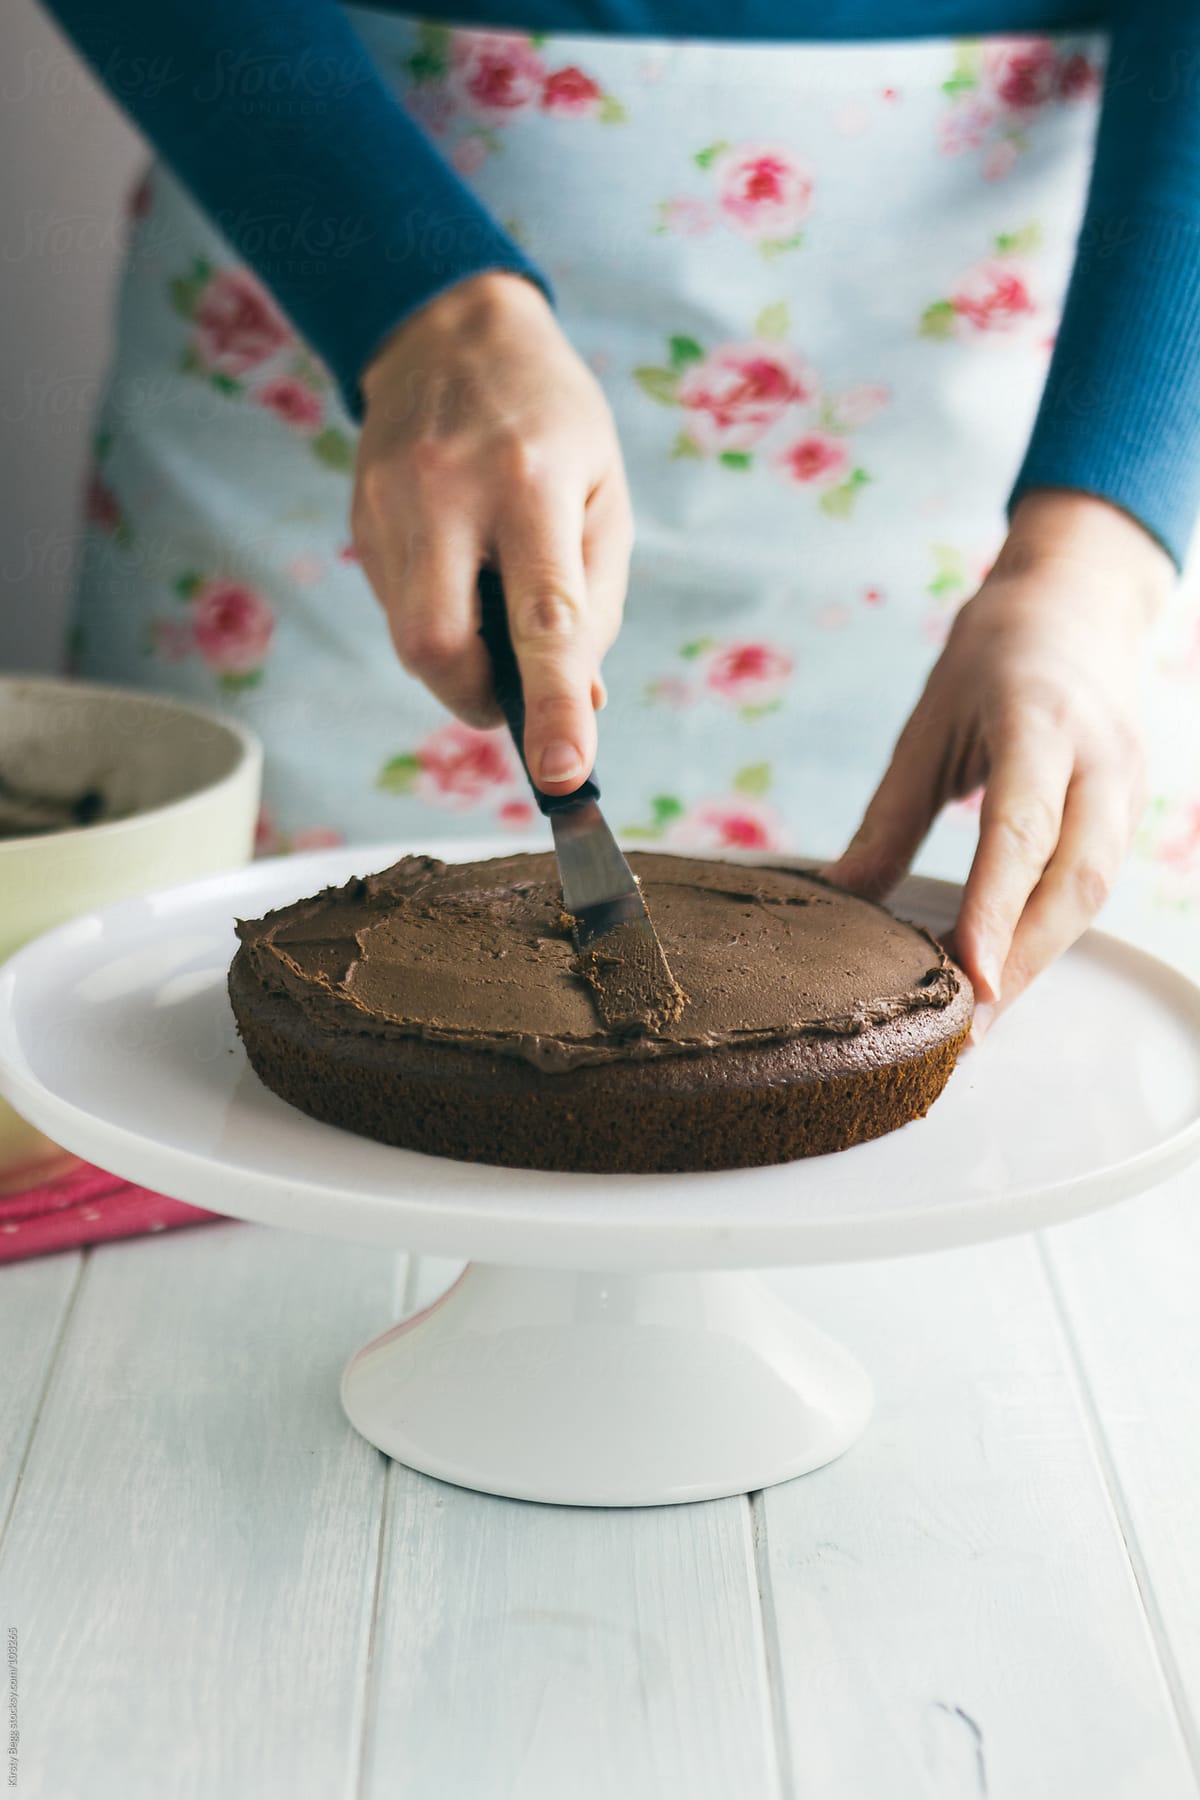 Woman spreading chocolate buttercream onto cake